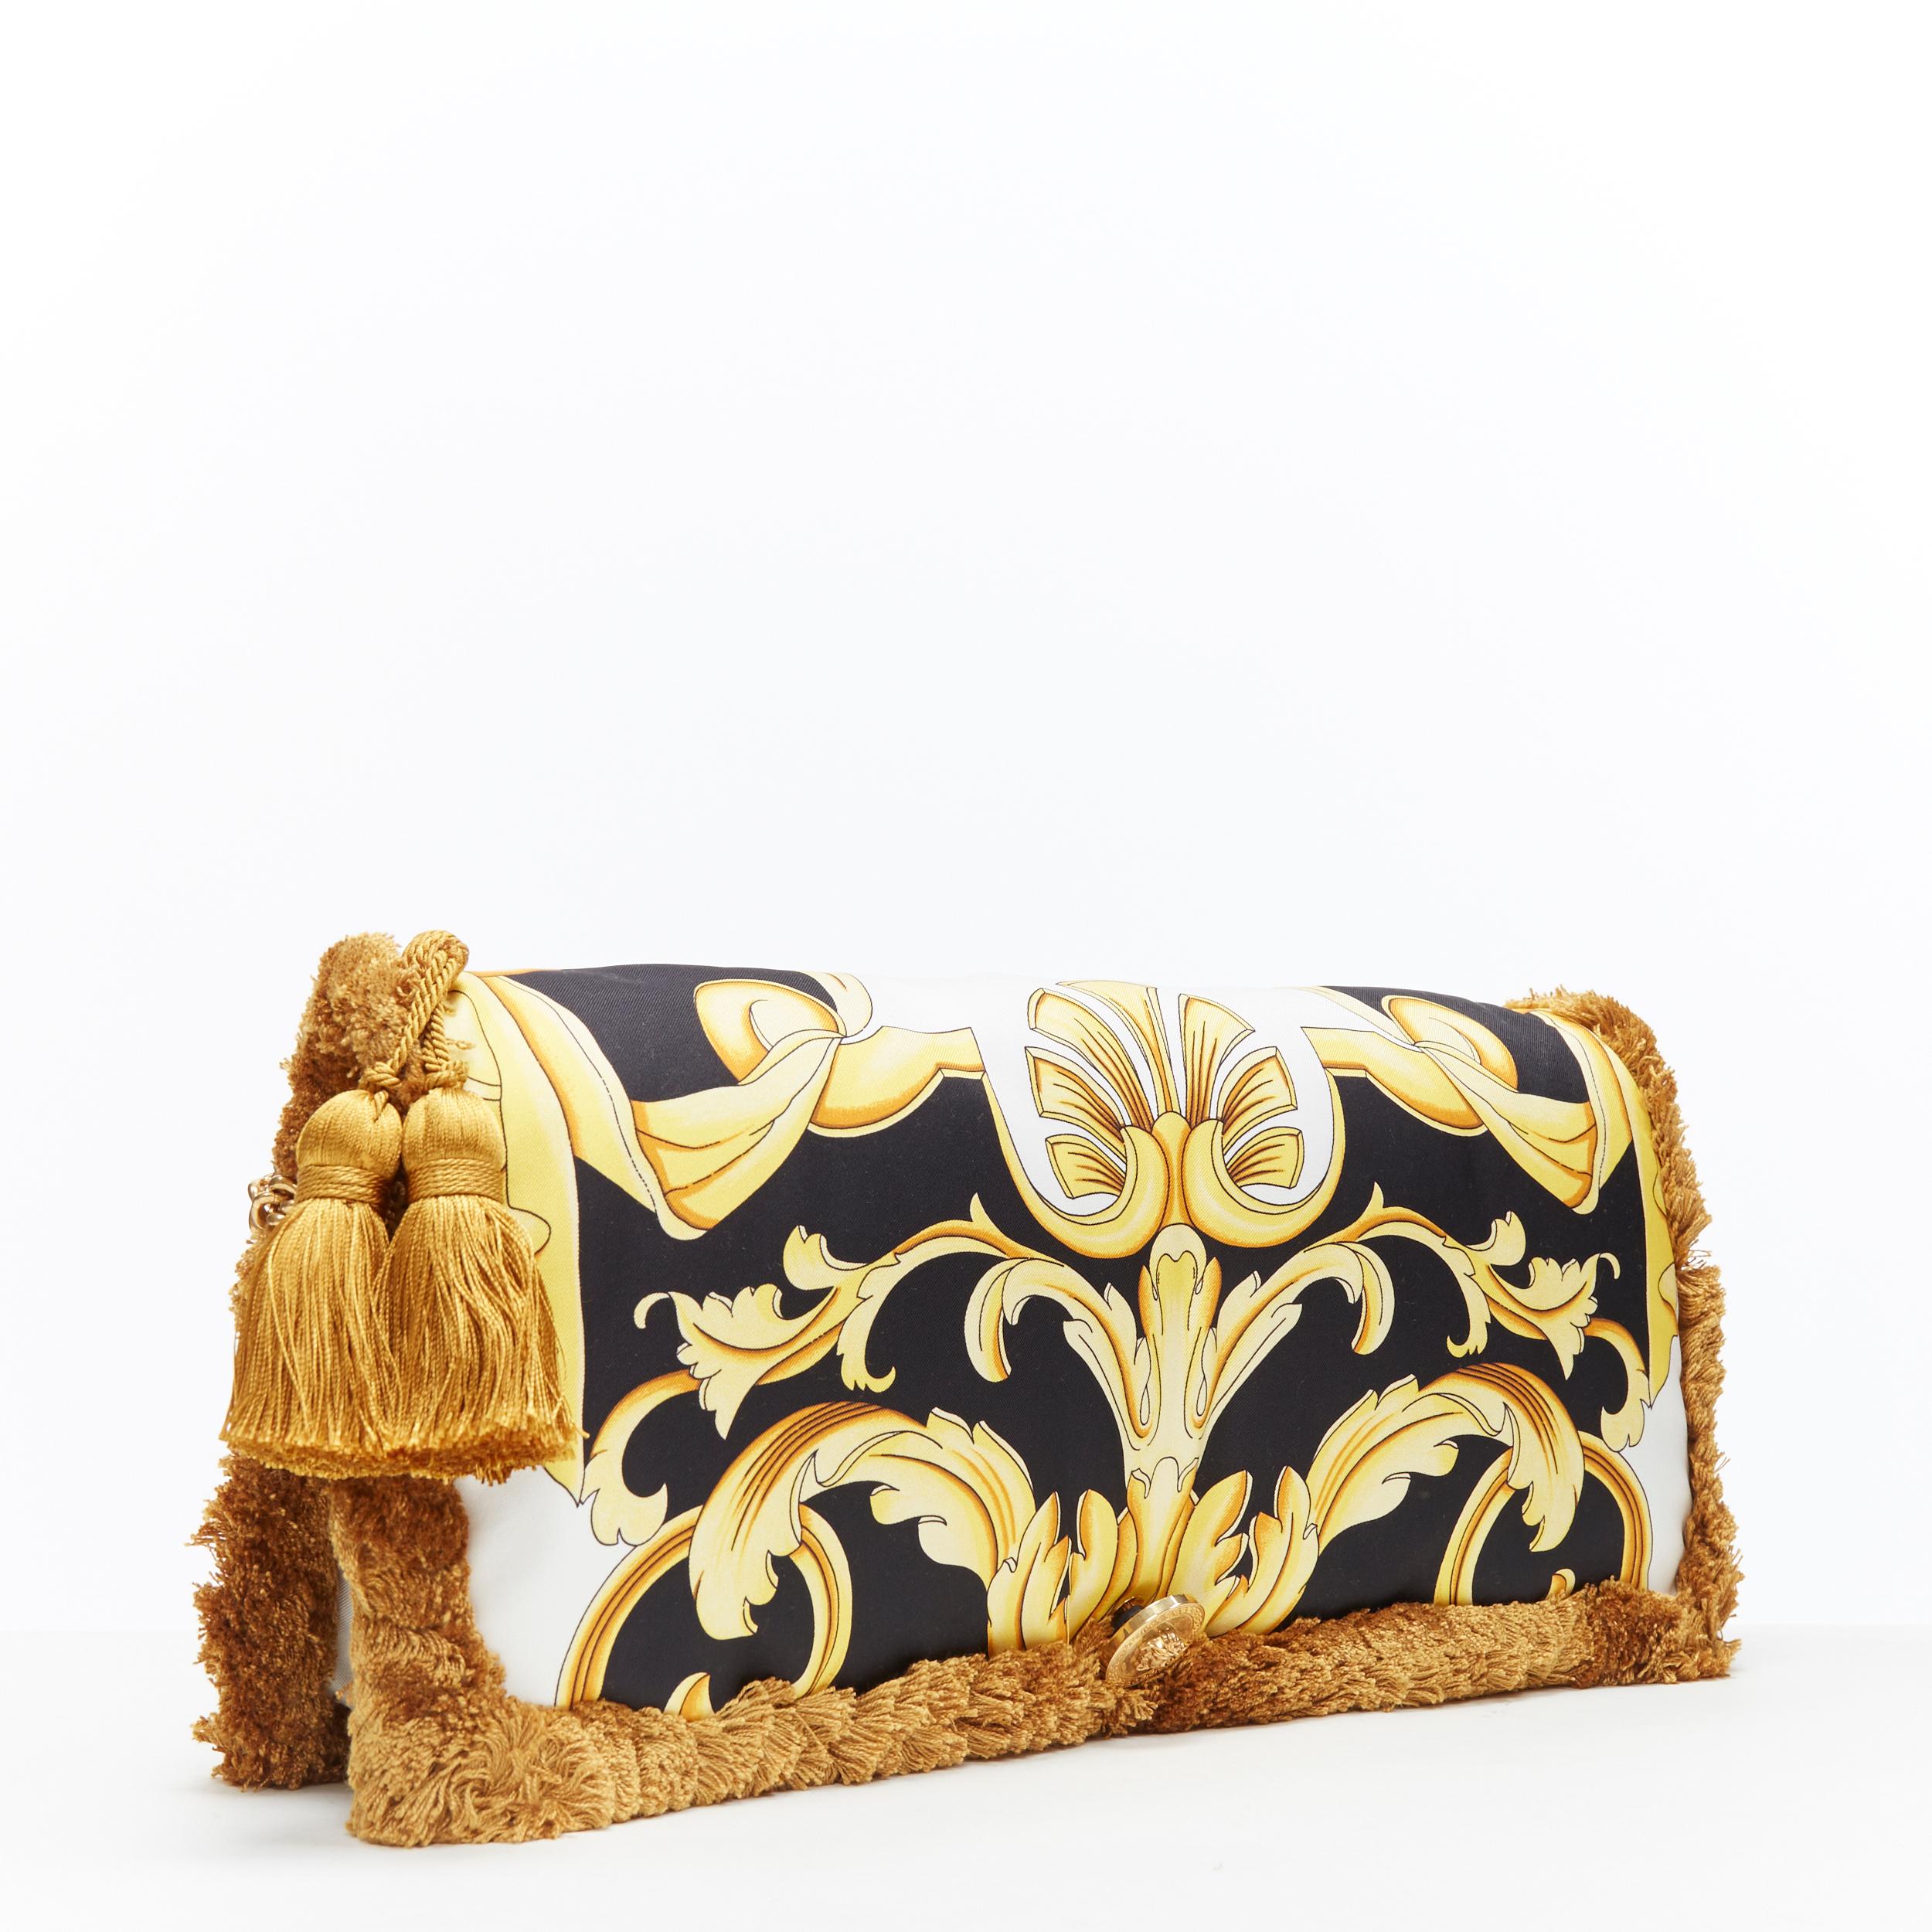 Beige new VERSACE 2018 Pillow Talk gold black baroque print silk tassel shoulder bag